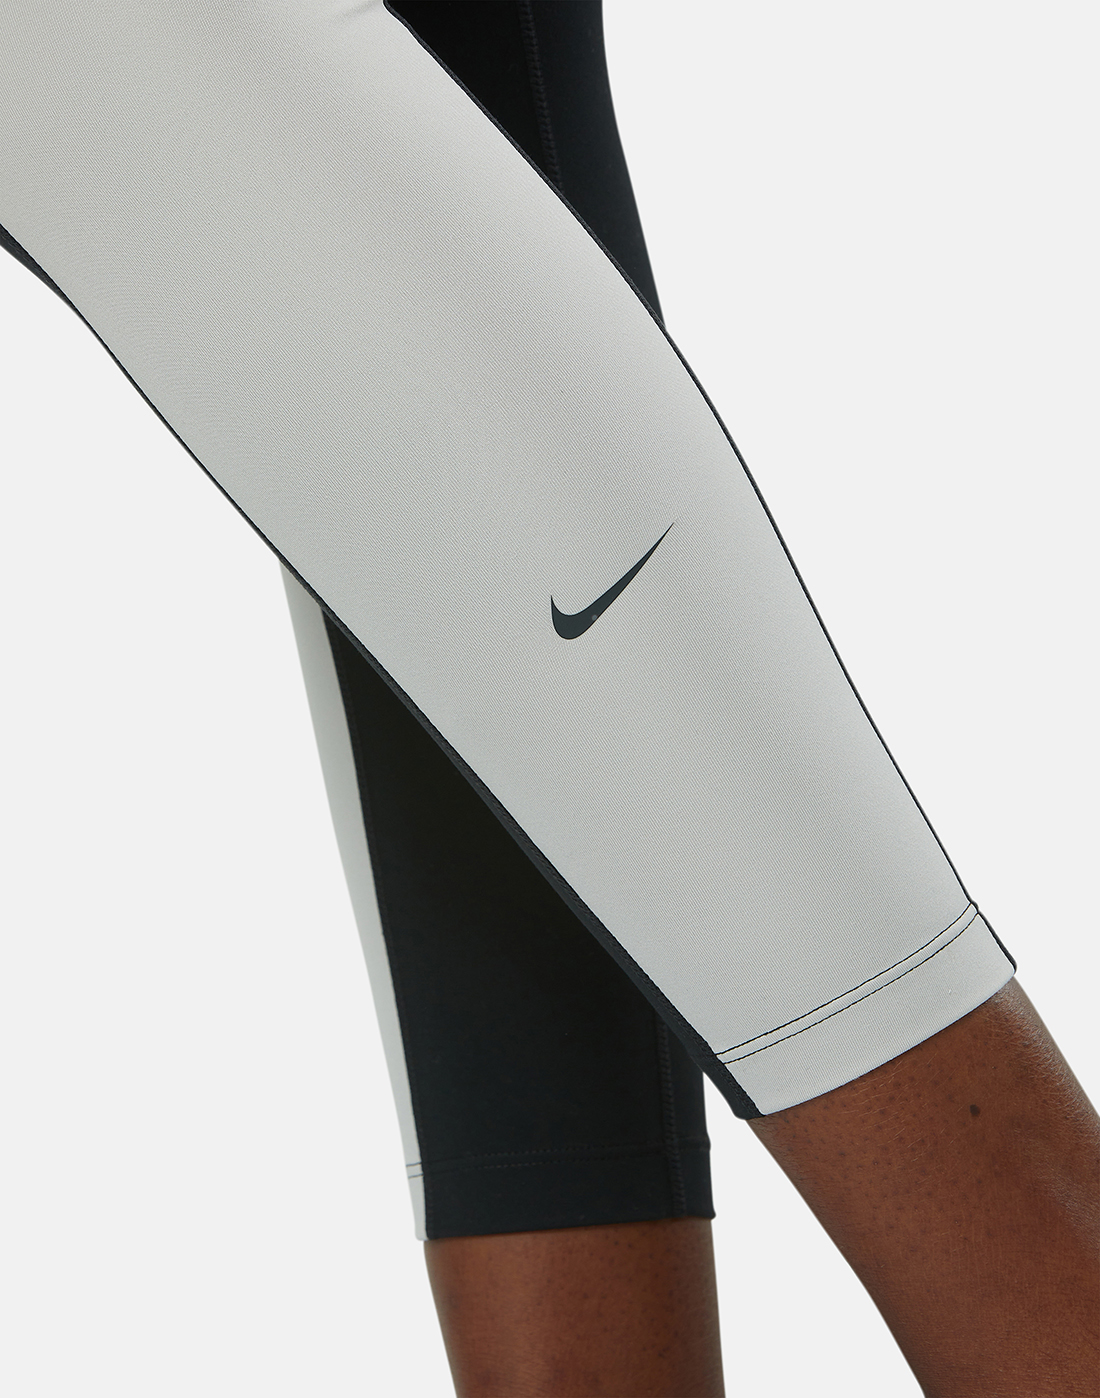 Nike Womens One 7/8 Mid Rise Leggings - Black